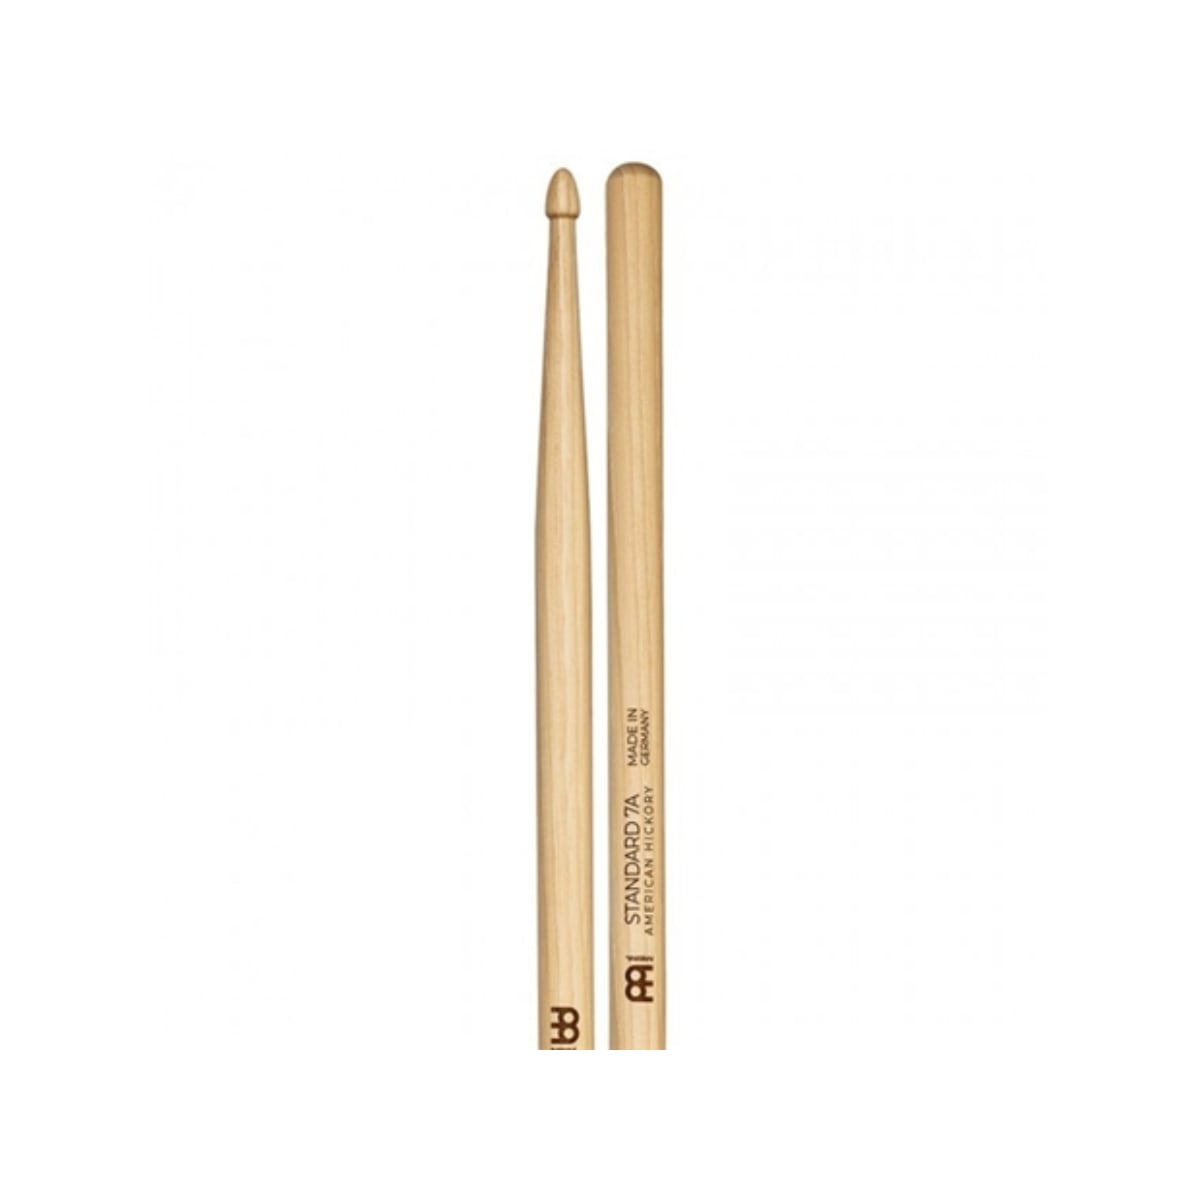 Meinl Stick and Brush | Standard 7A Wood Tip Drum Sticks